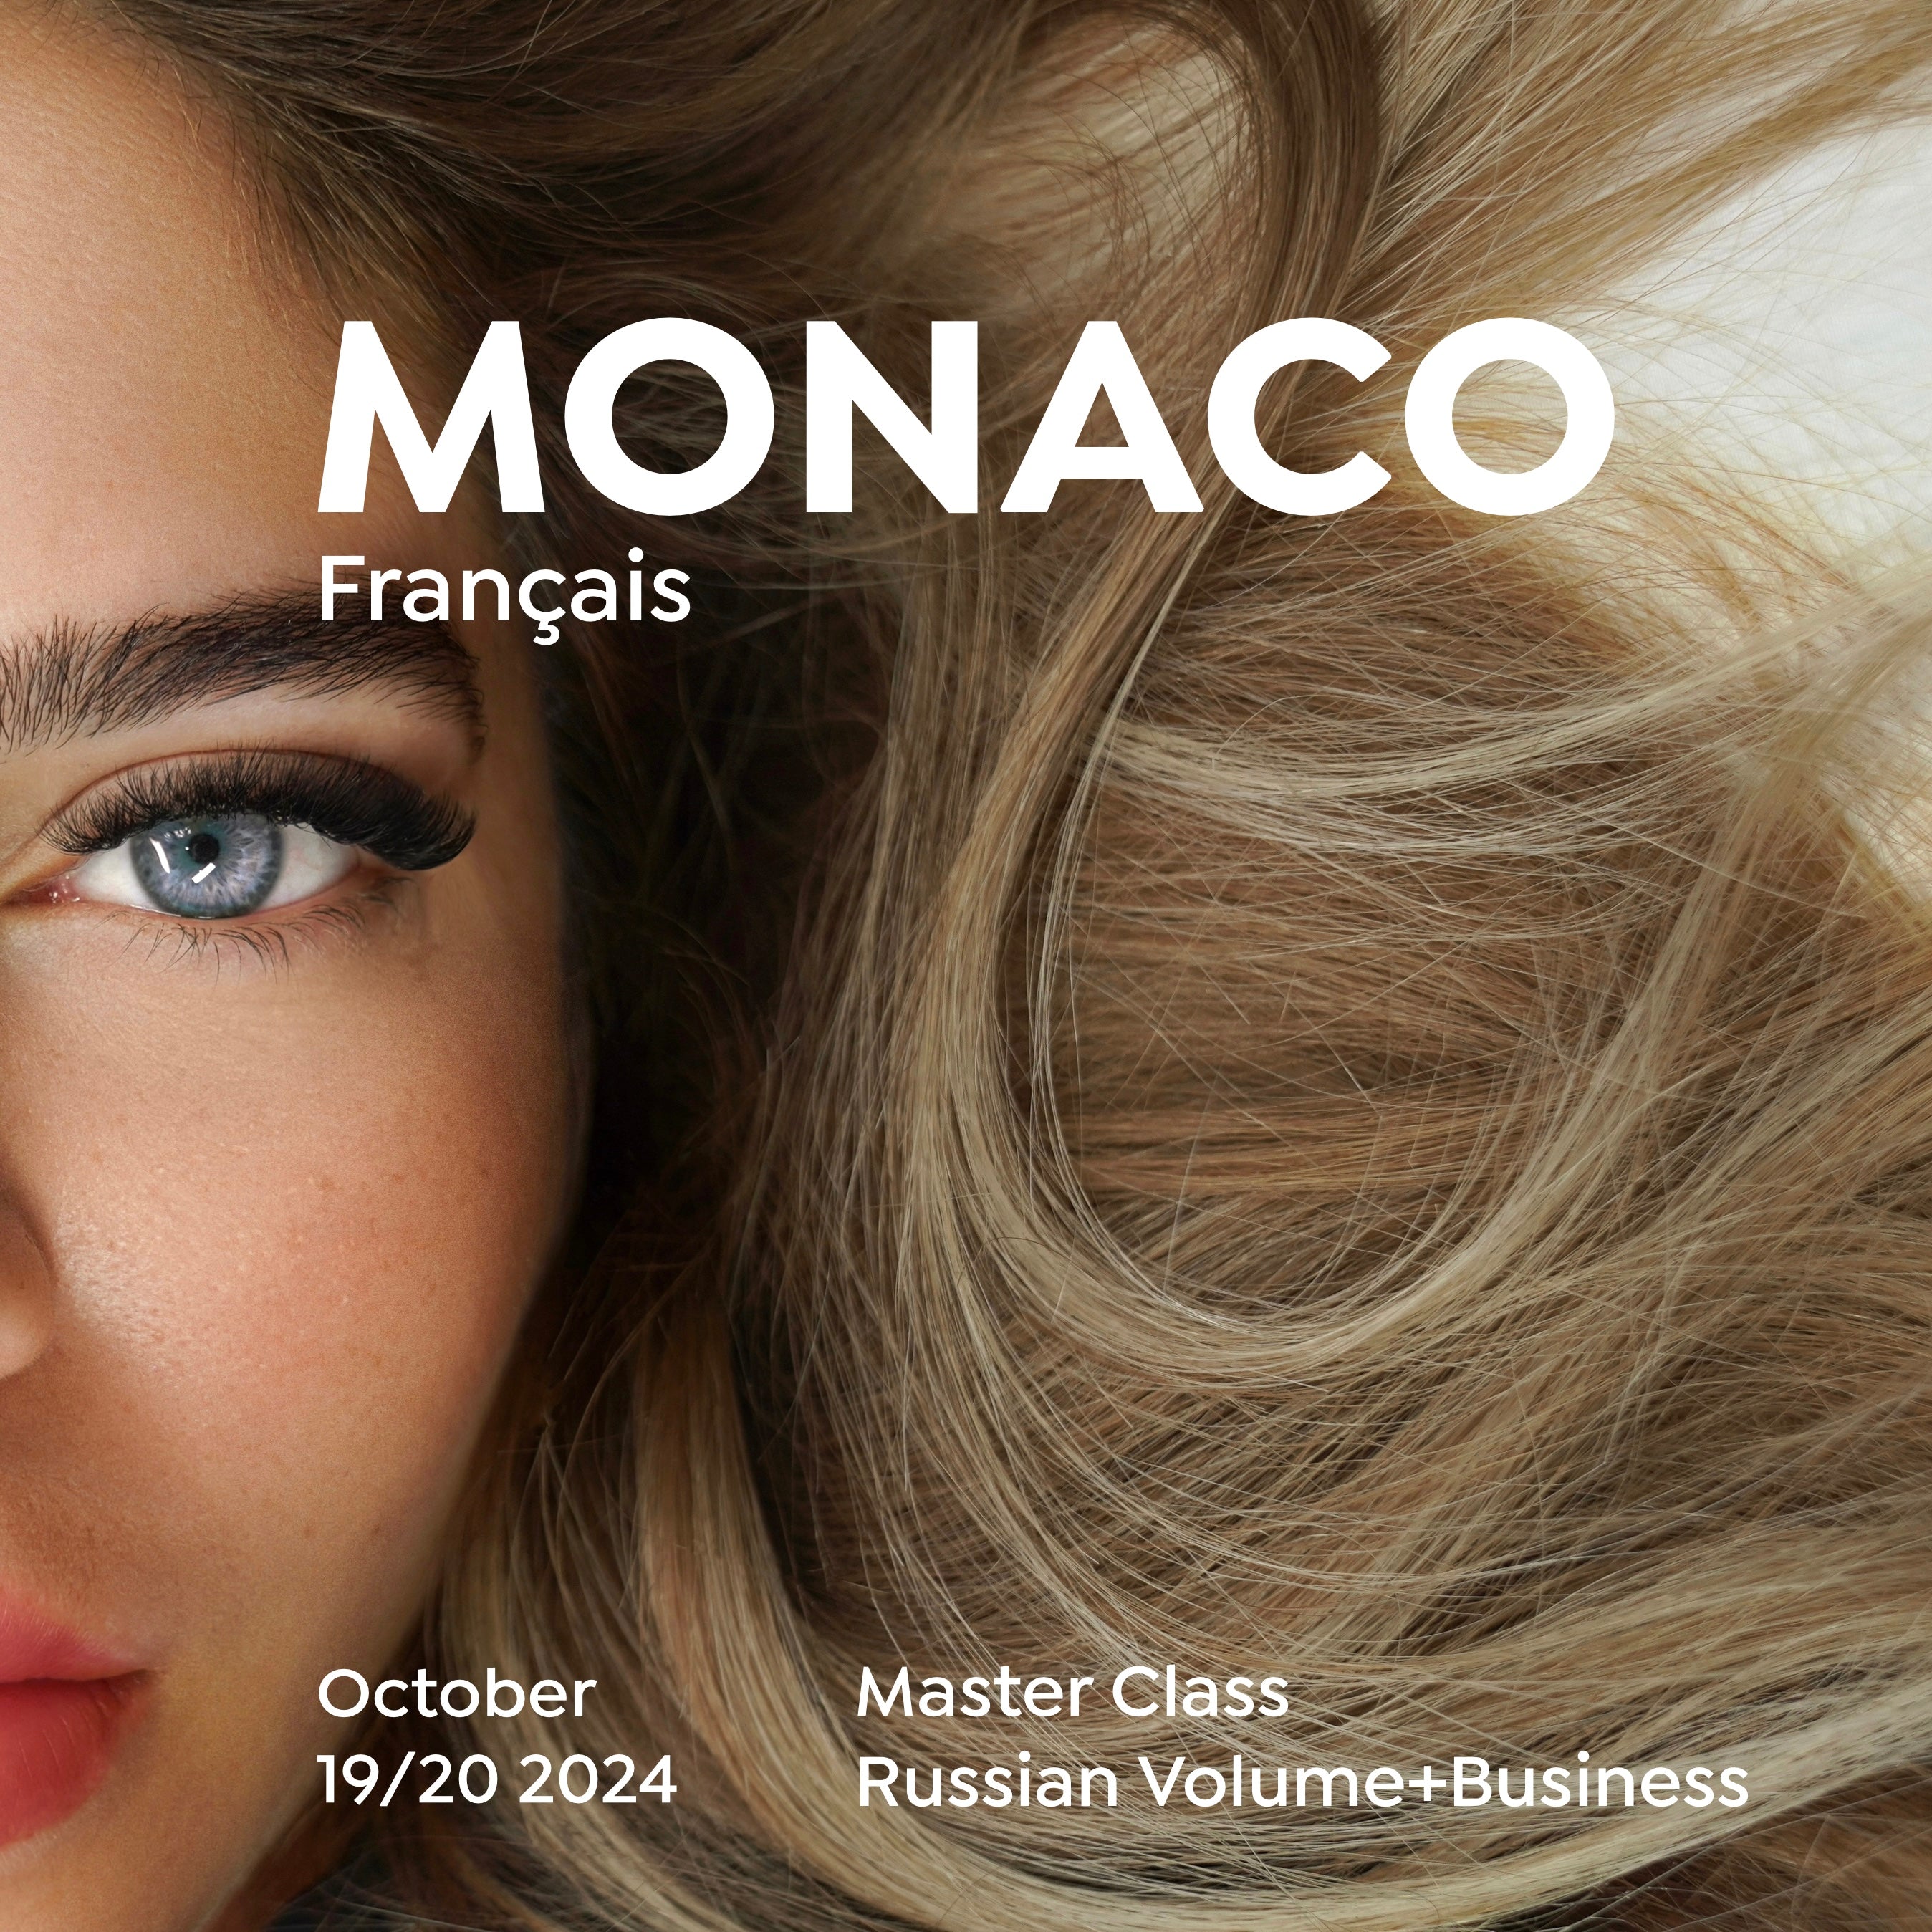 Volume Master Class, Monaco, France, October 19th-20th, 2024